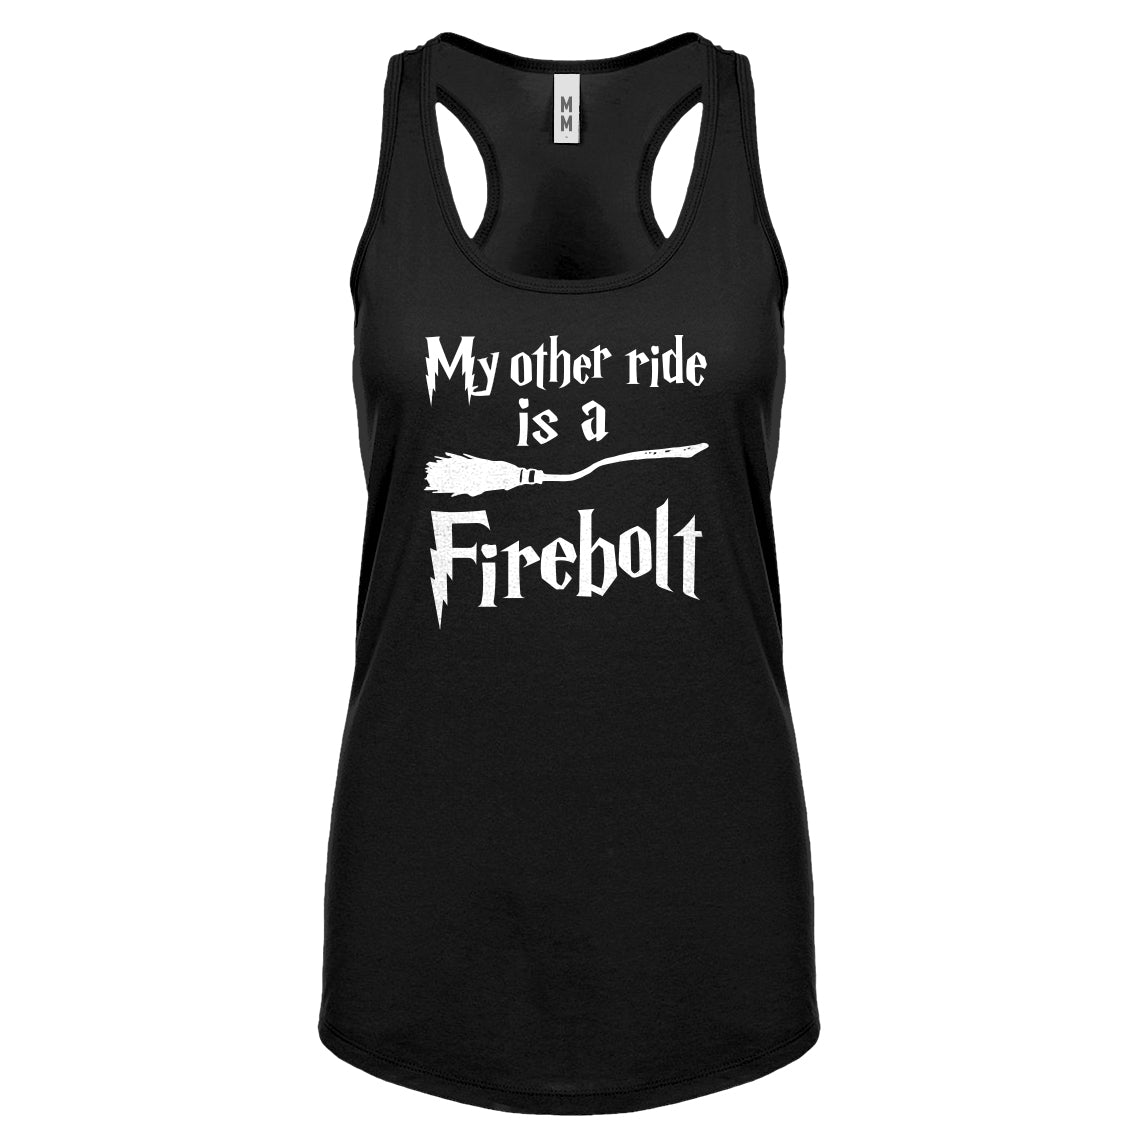 My Other Ride is a Firebolt Womens Racerback Tank Top